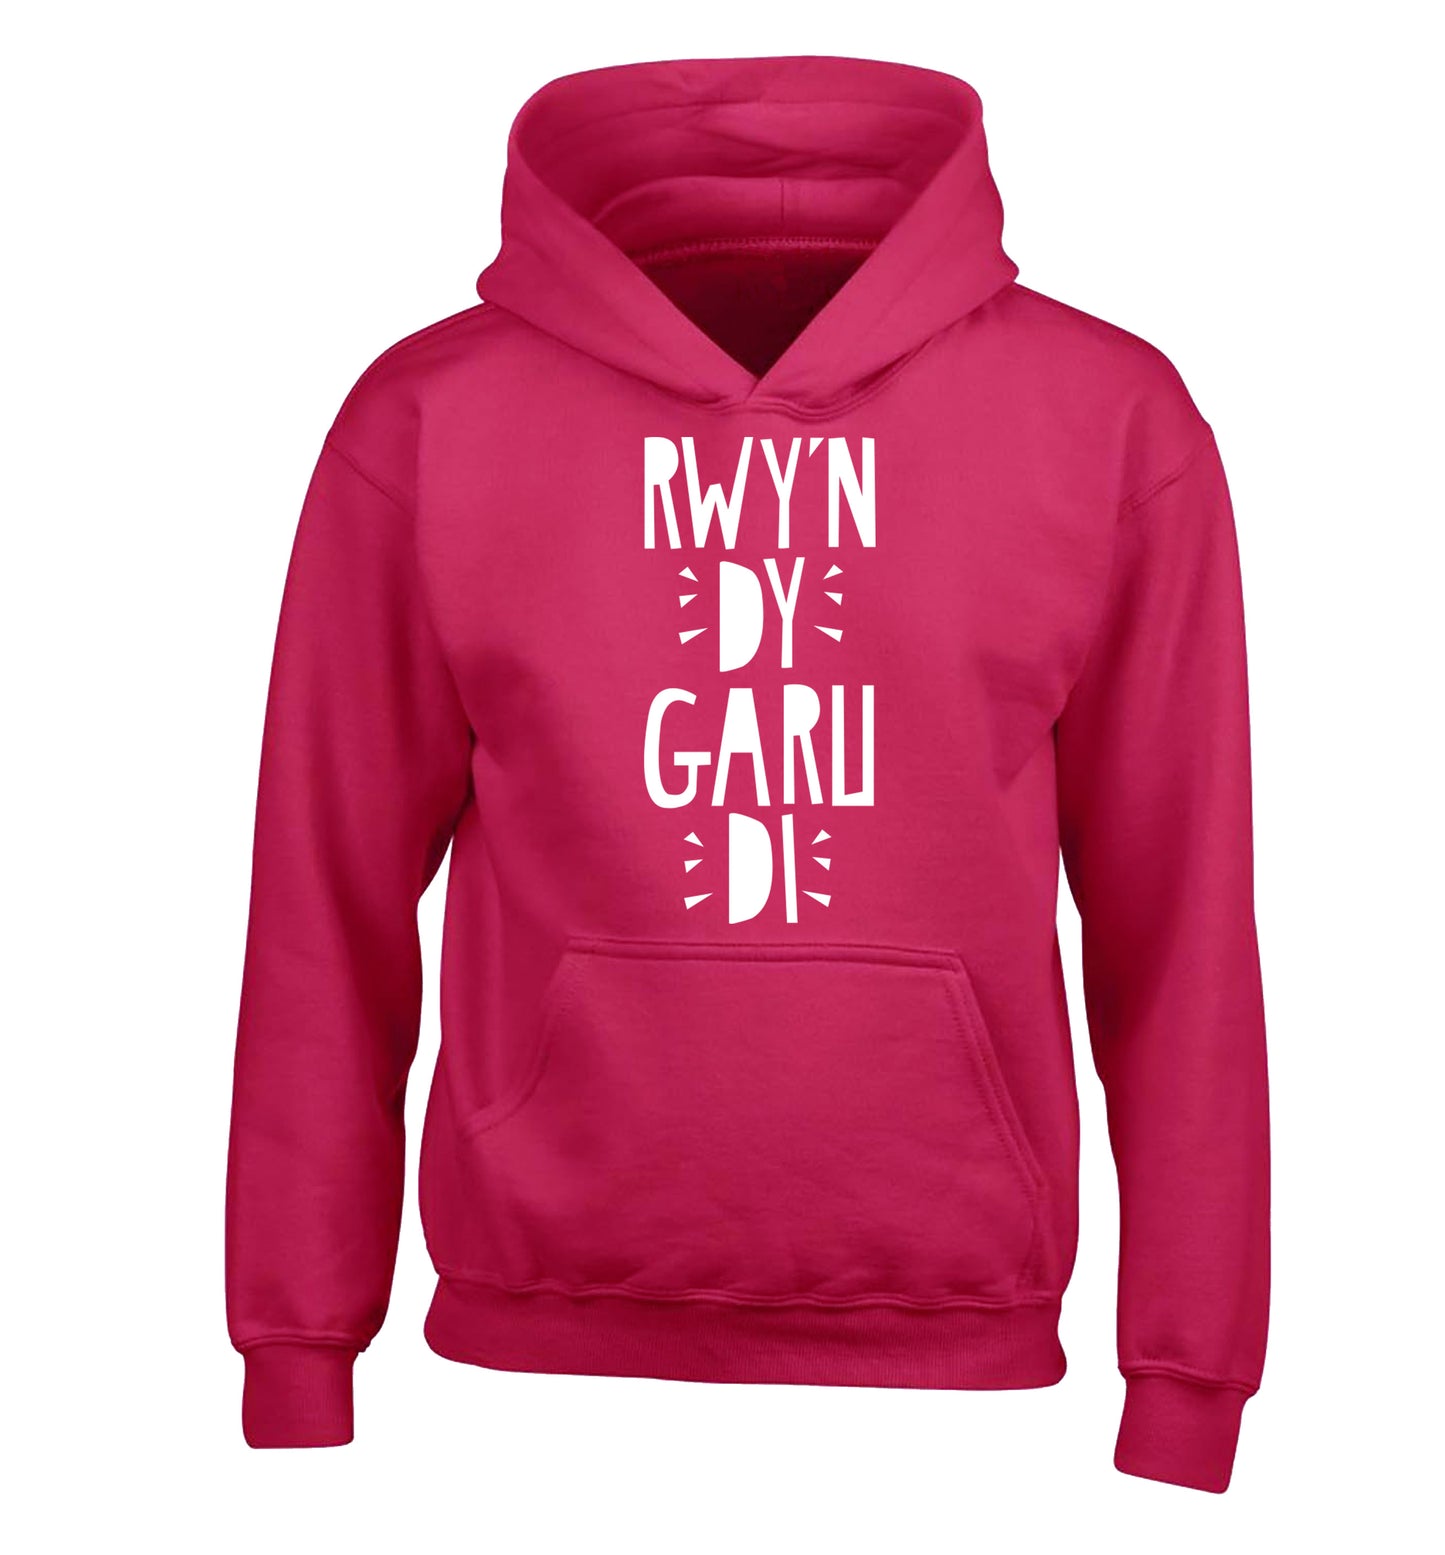 Rwy'n dy garu di - I love you children's pink hoodie 12-13 Years